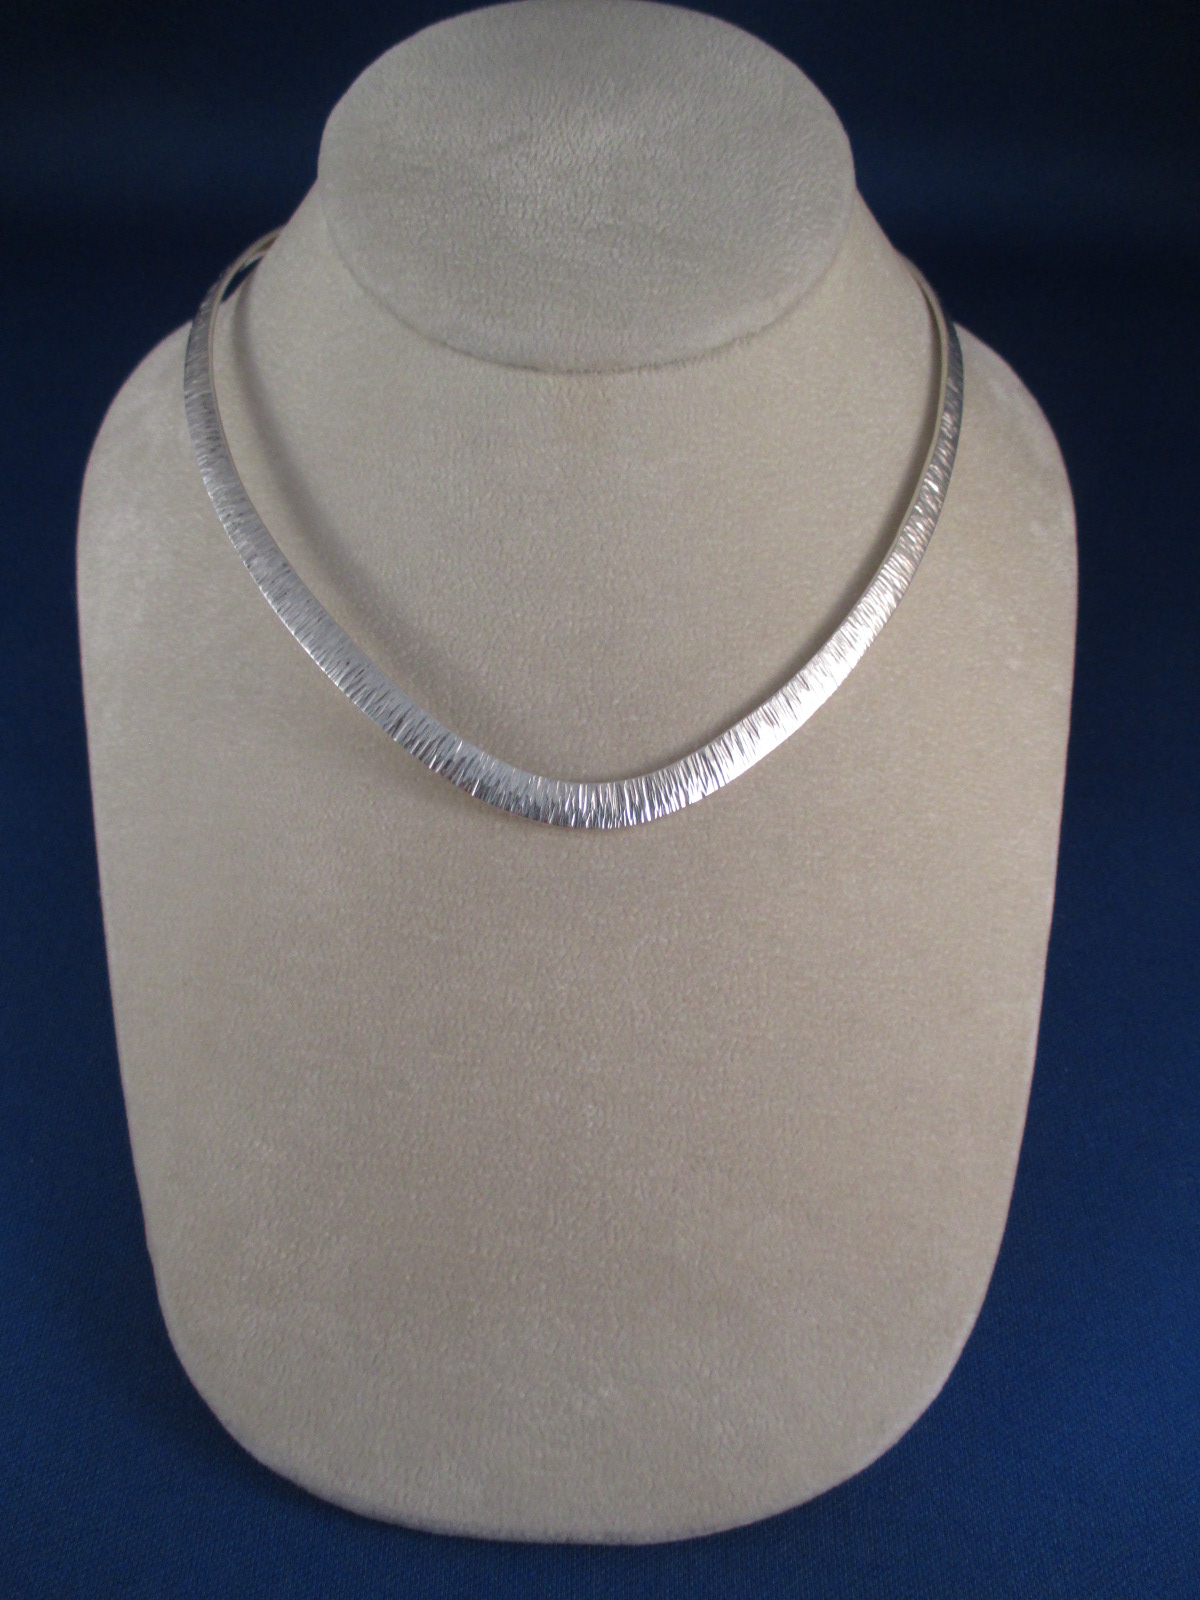 Corrugated Sterling Silver Collar Necklace by Navajo jewelry artist, Al Joe $550-